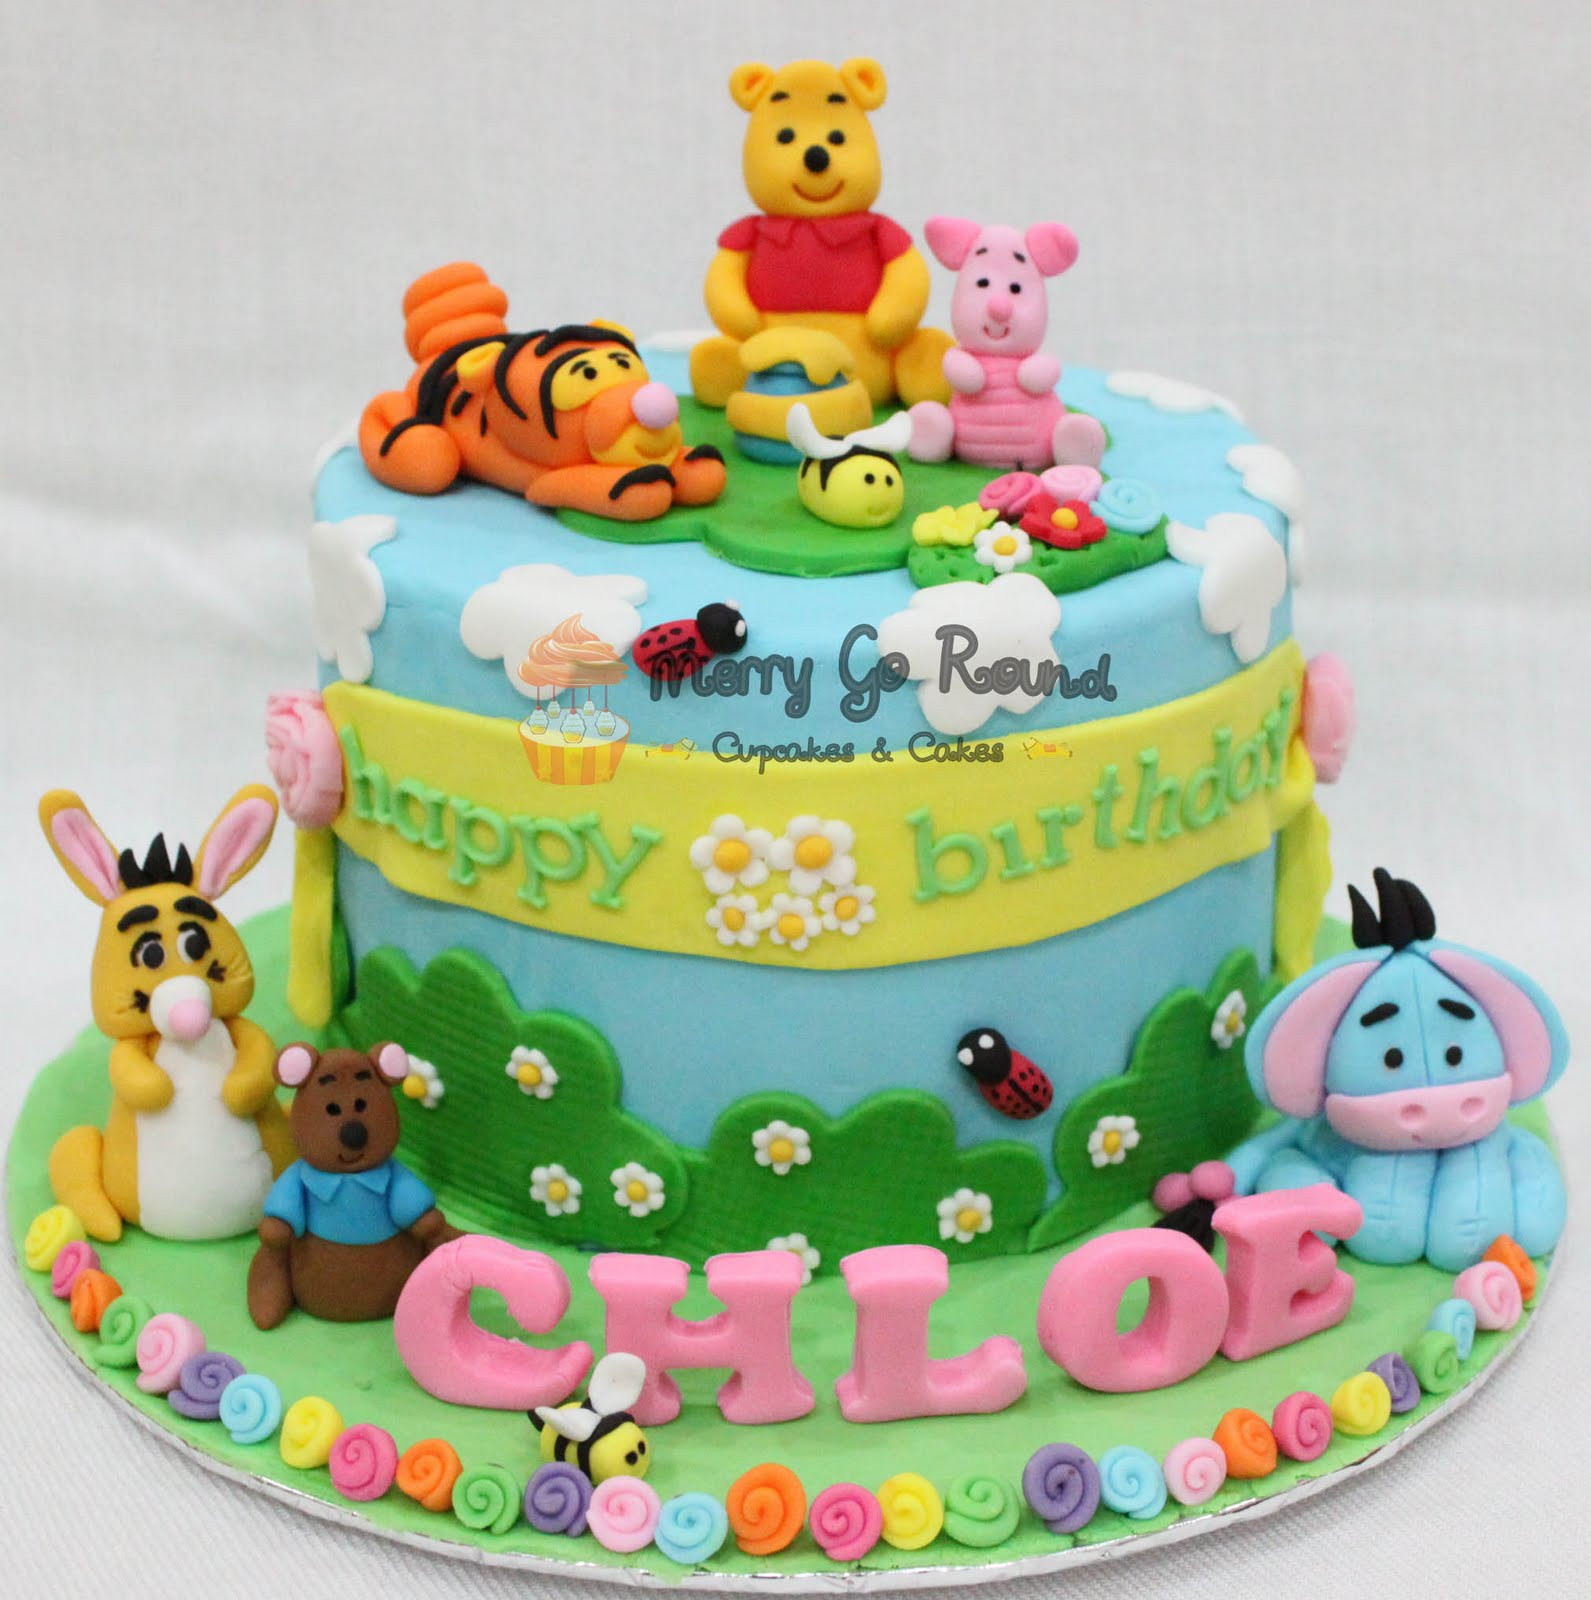 Winnie The Pooh Birthday Cakes
 Merry Go Round Cupcakes & Cakes Winnie The Pooh